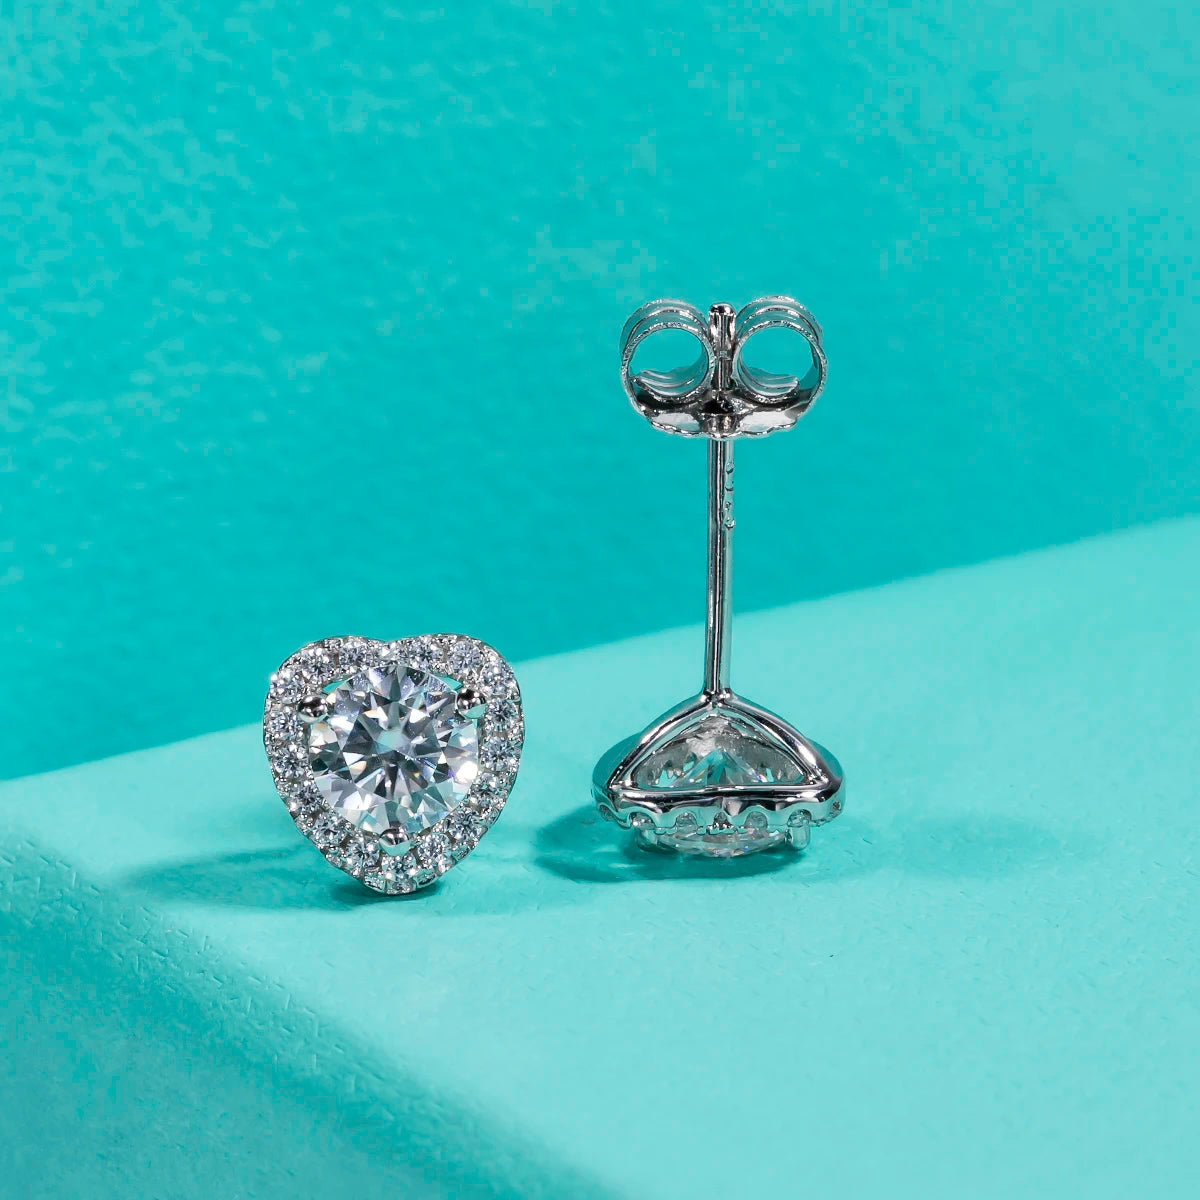 1cttw D Color Moissanite Diamond 925 Sterling Silver Heart Stud Earrings For Women Gift Jewellery